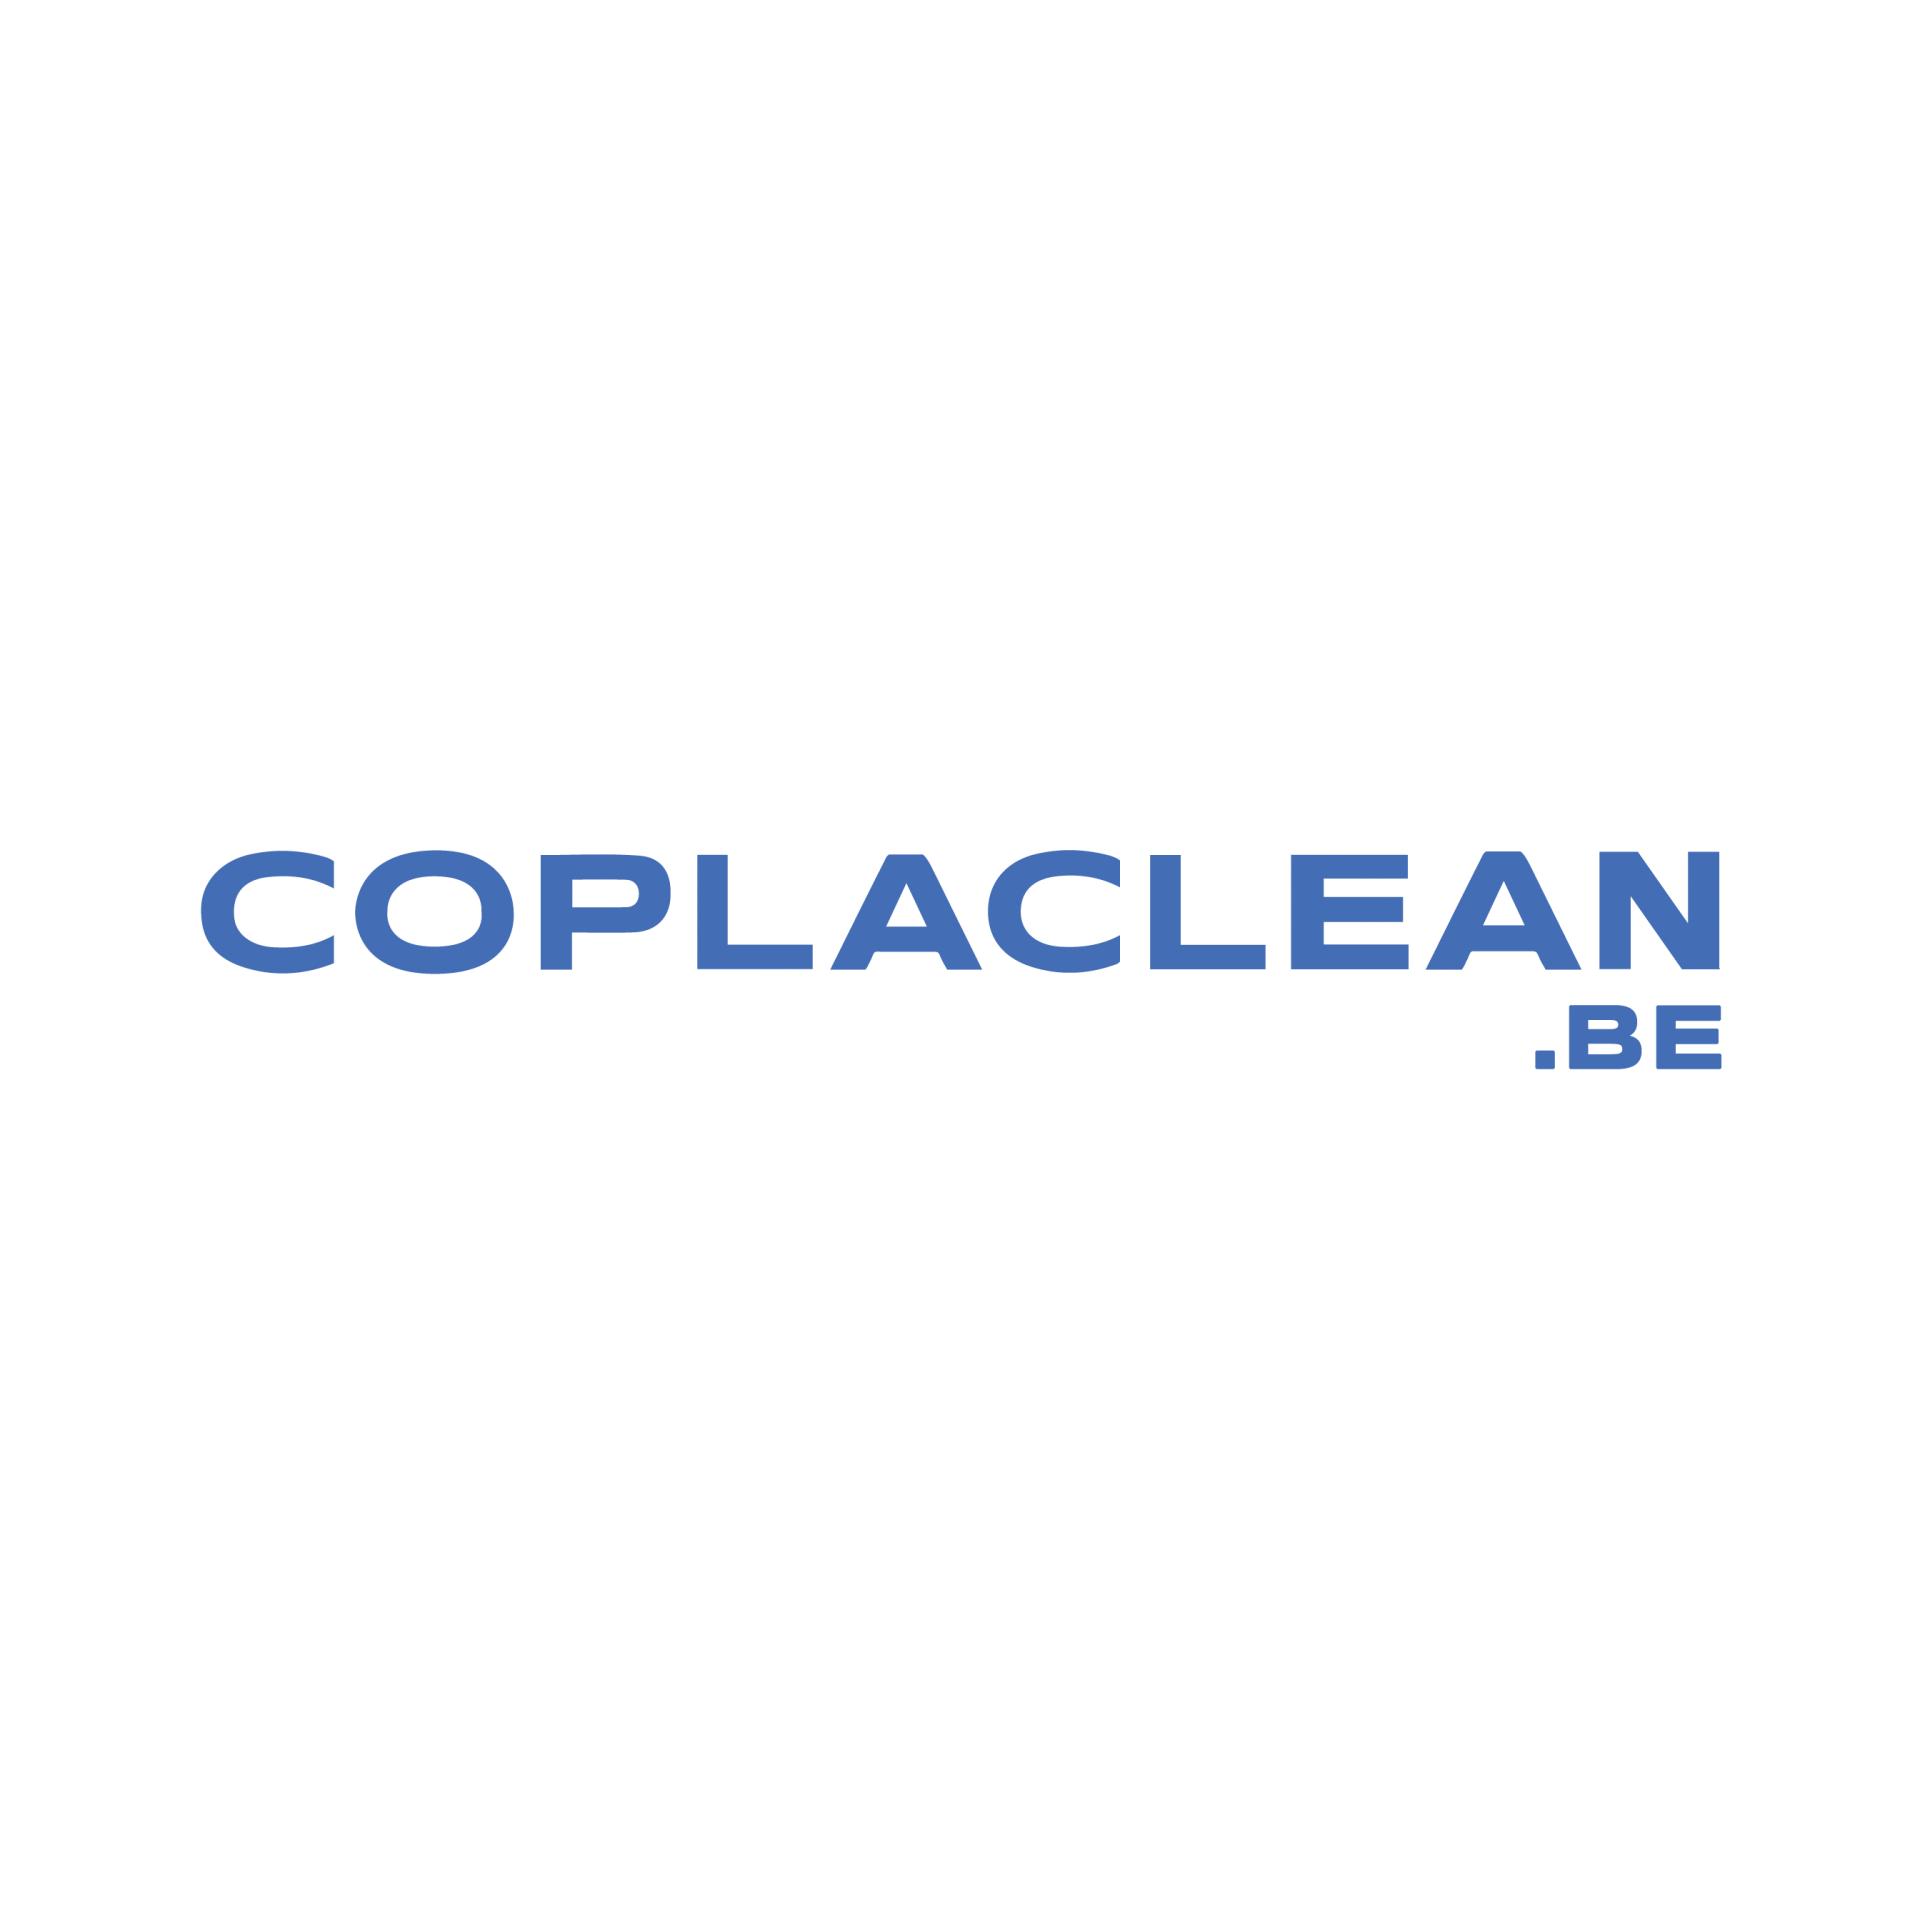 Logo coplaclean be fond blanc 2